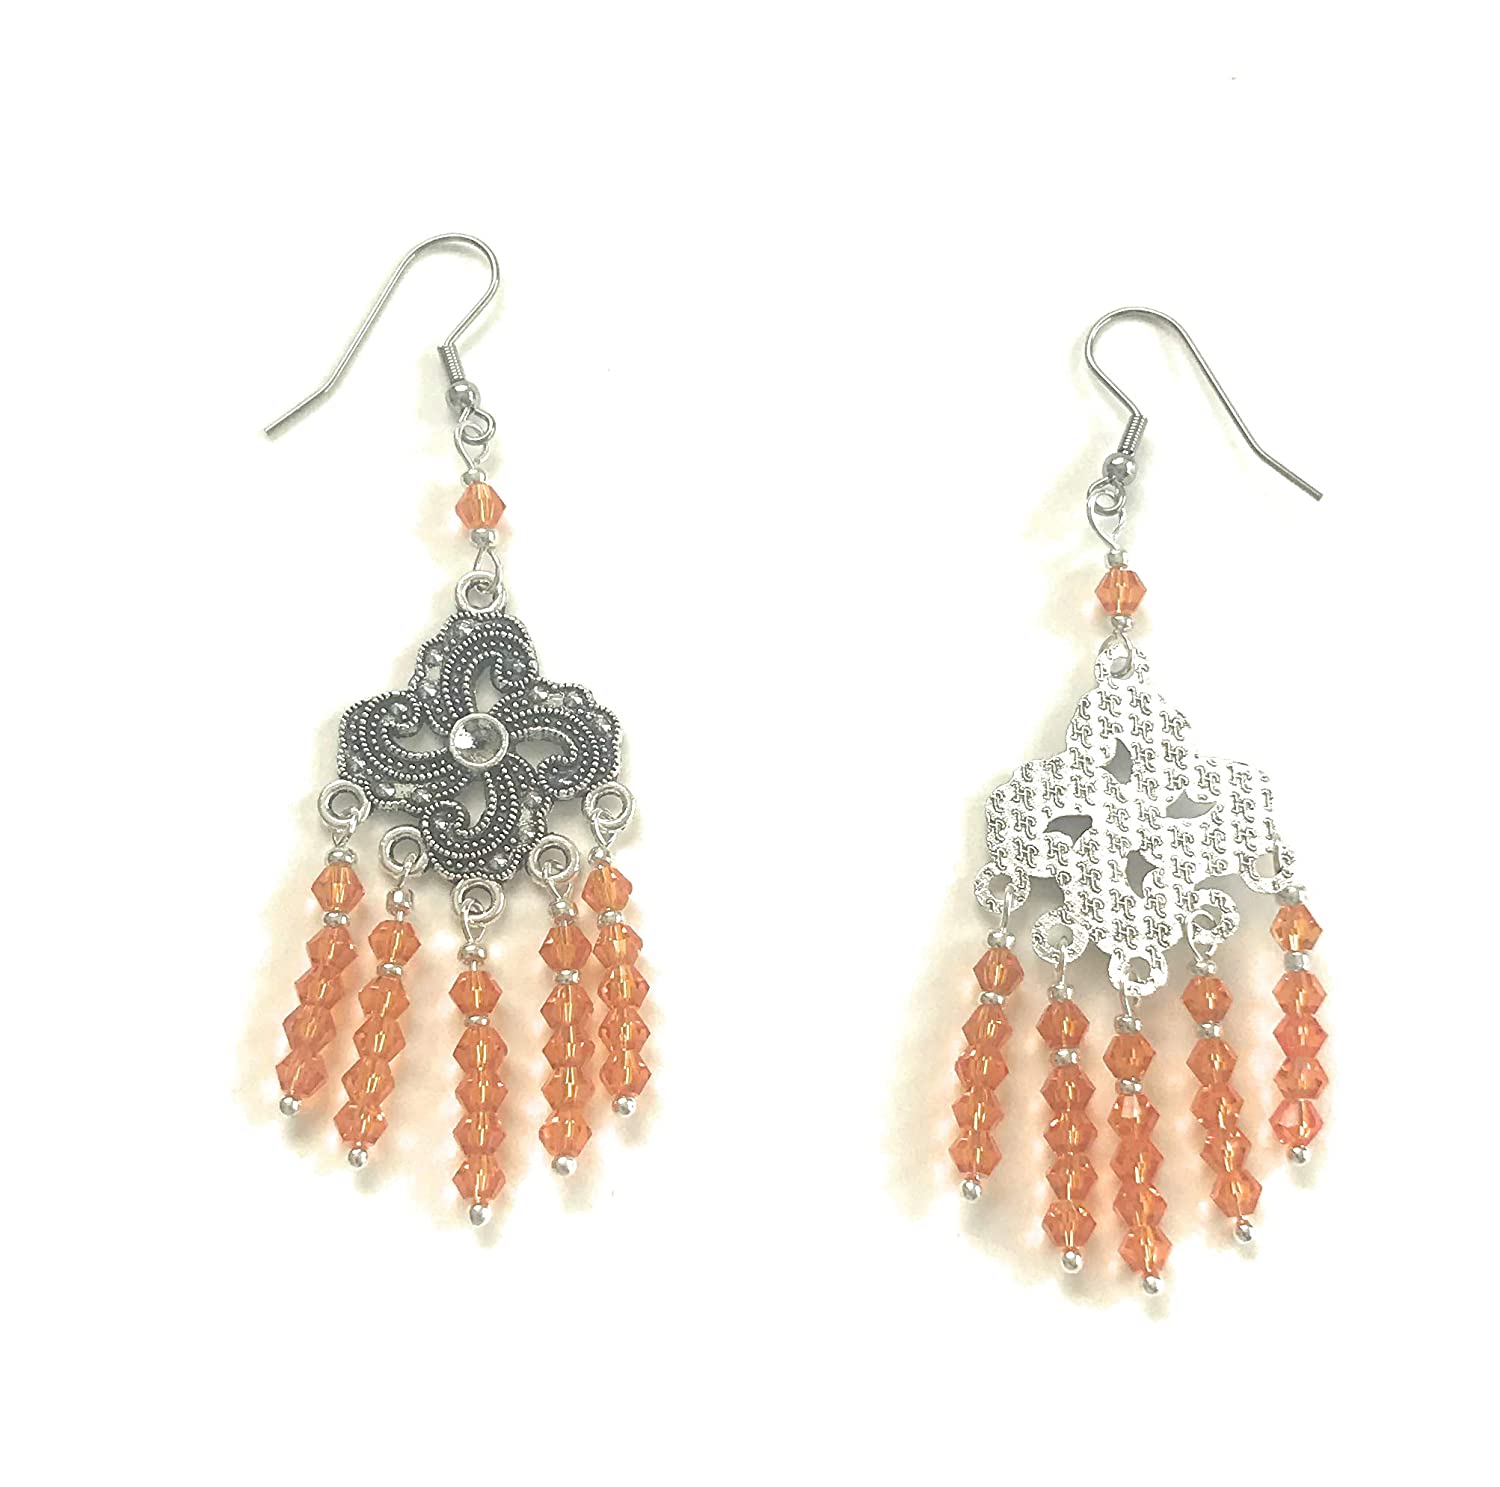 Orange Beaded Chandelier Earrings Front and Back from Scott D Jewelry Designs